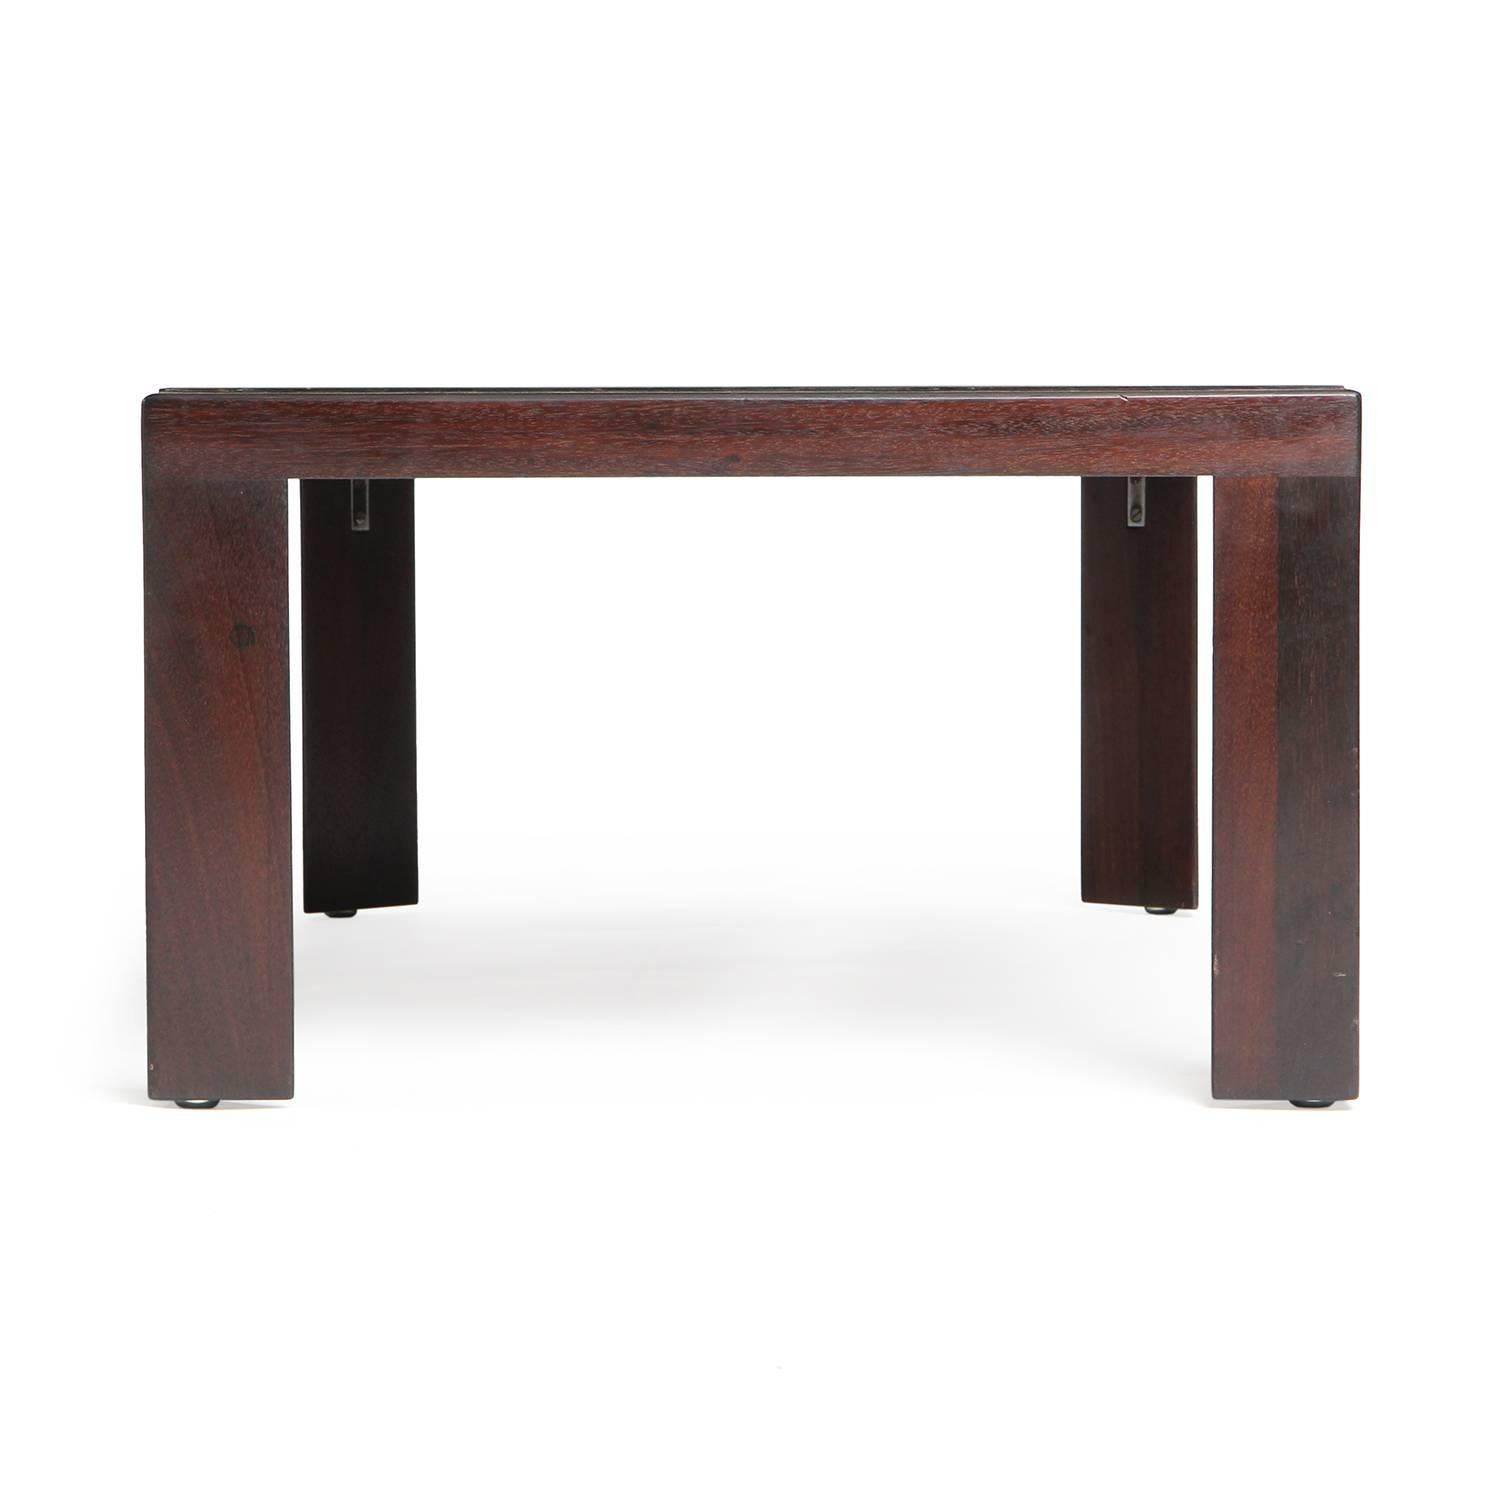 A rectangular dark walnut low table having a black laminate top and distinctive triangular legs.